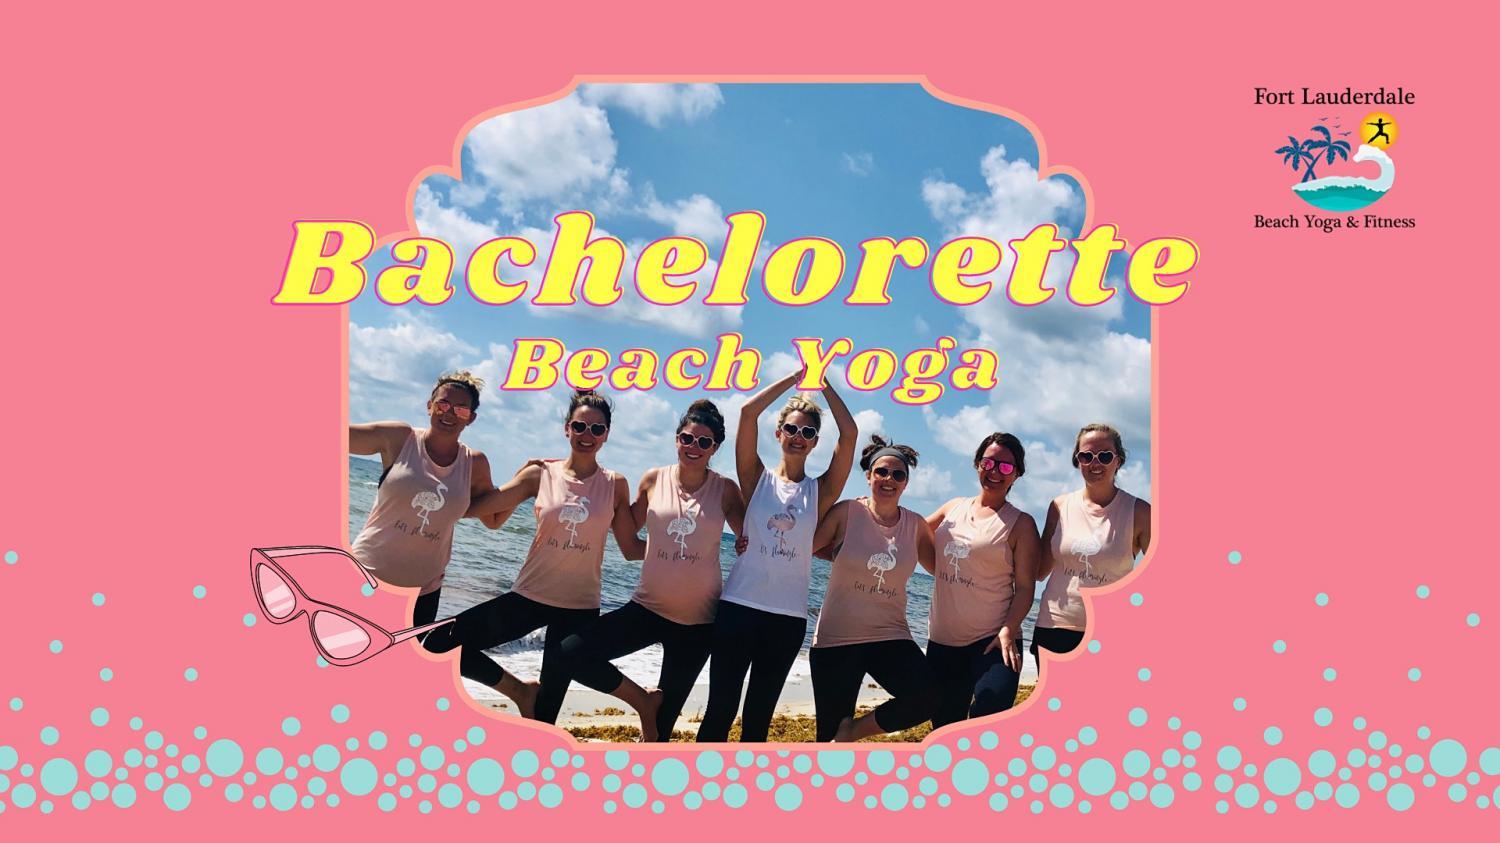 Bachelorette Beach Yoga
Thu Nov 10, 9:00 AM - Thu Nov 10, 10:00 AM
in 21 days